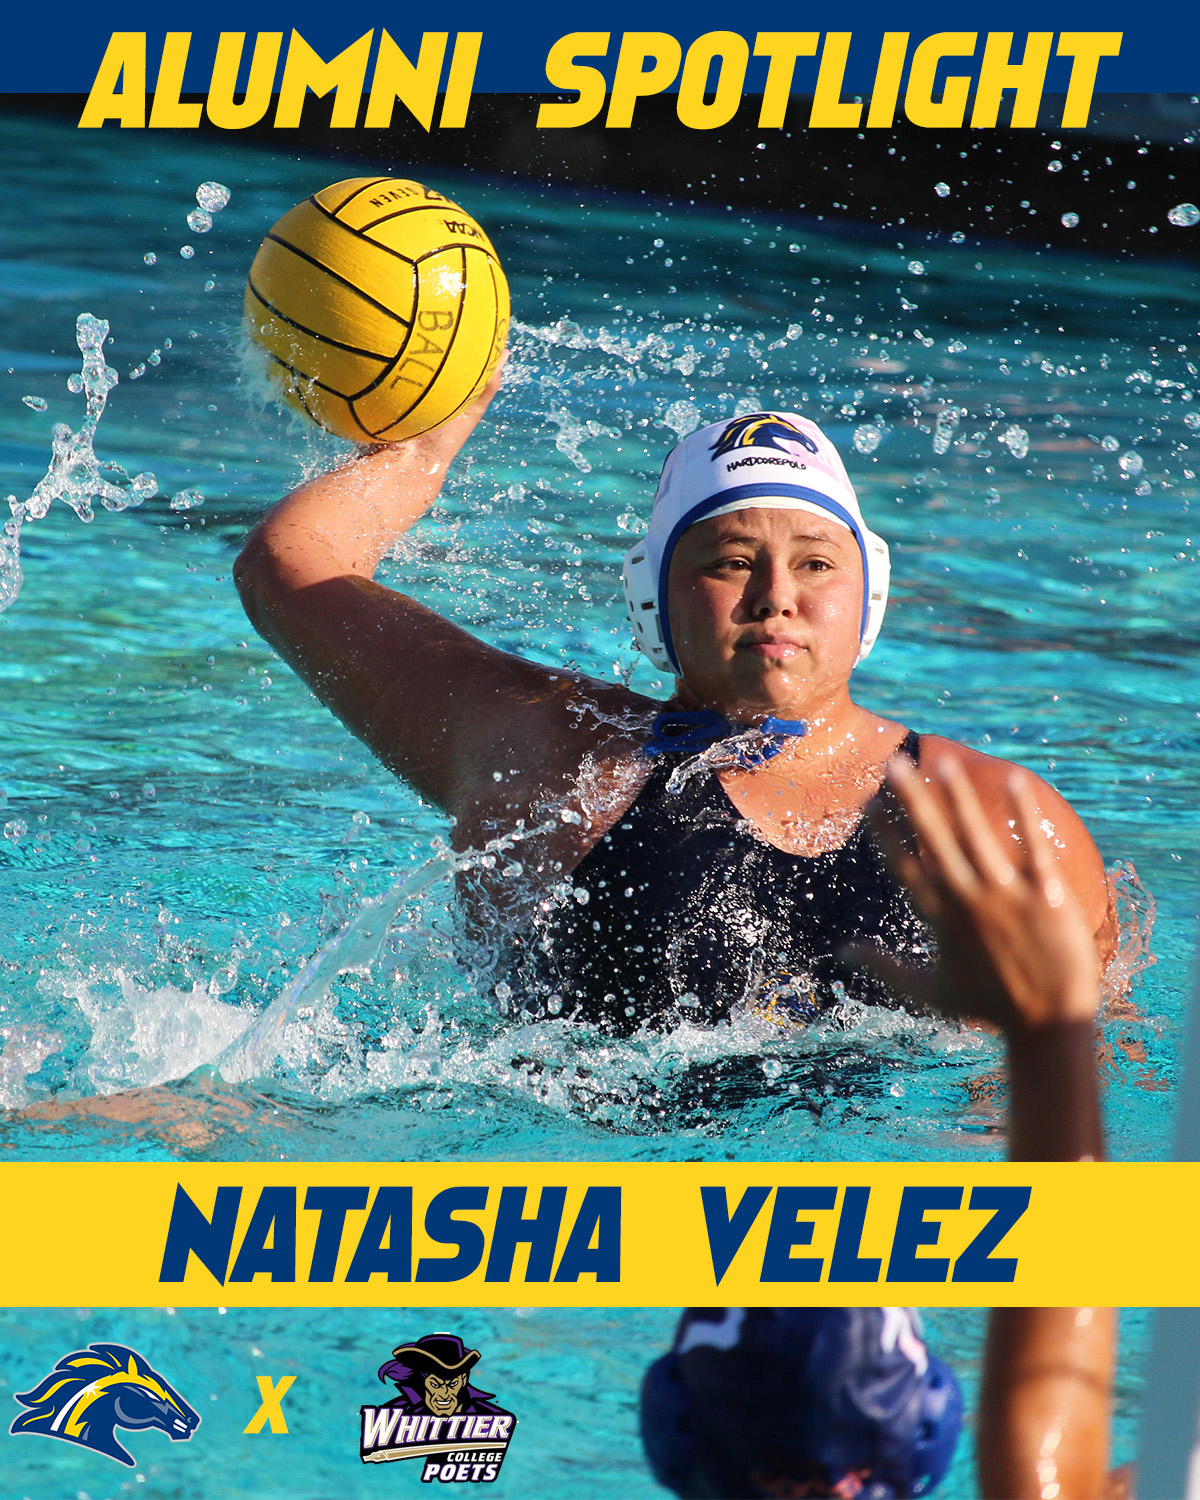 Alumni Spotlight: Charger's Women's Water Polo Star, Natasha Velez